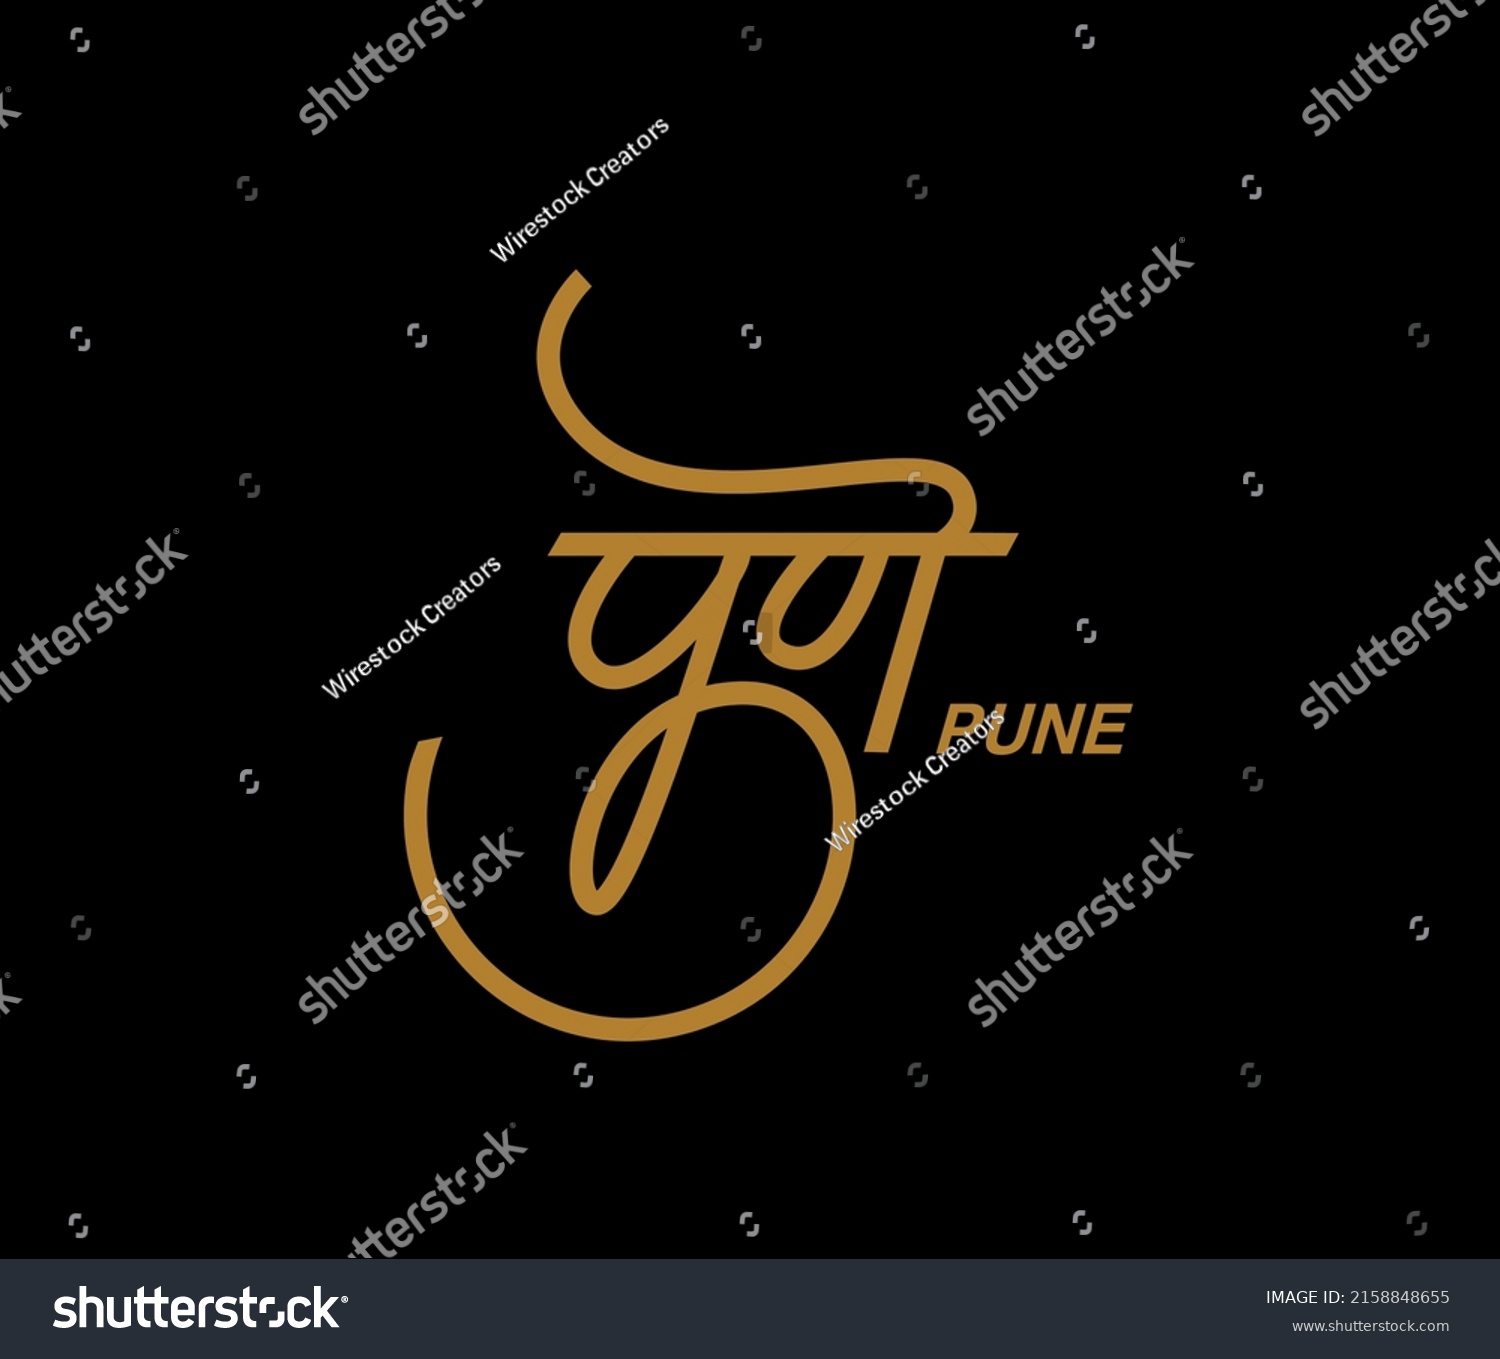 SVG of Pune Written in Devanagari Calligraphy  Pune city name in India  Pune calligraphy  svg